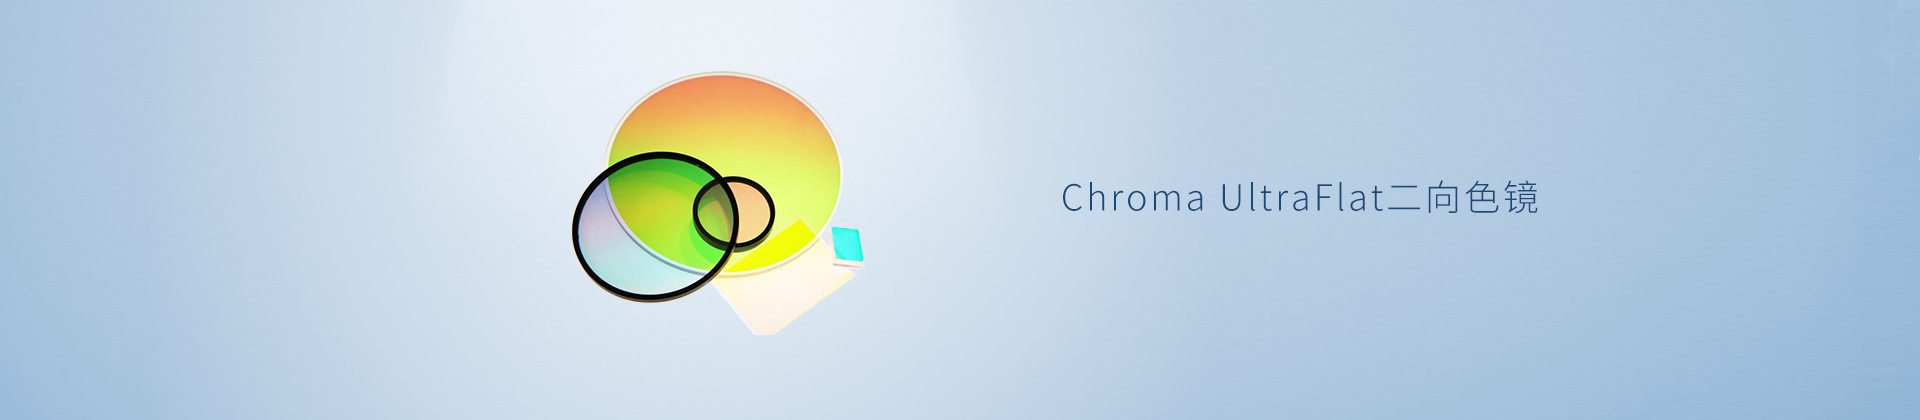 Chroma UltraFlat二向色镜